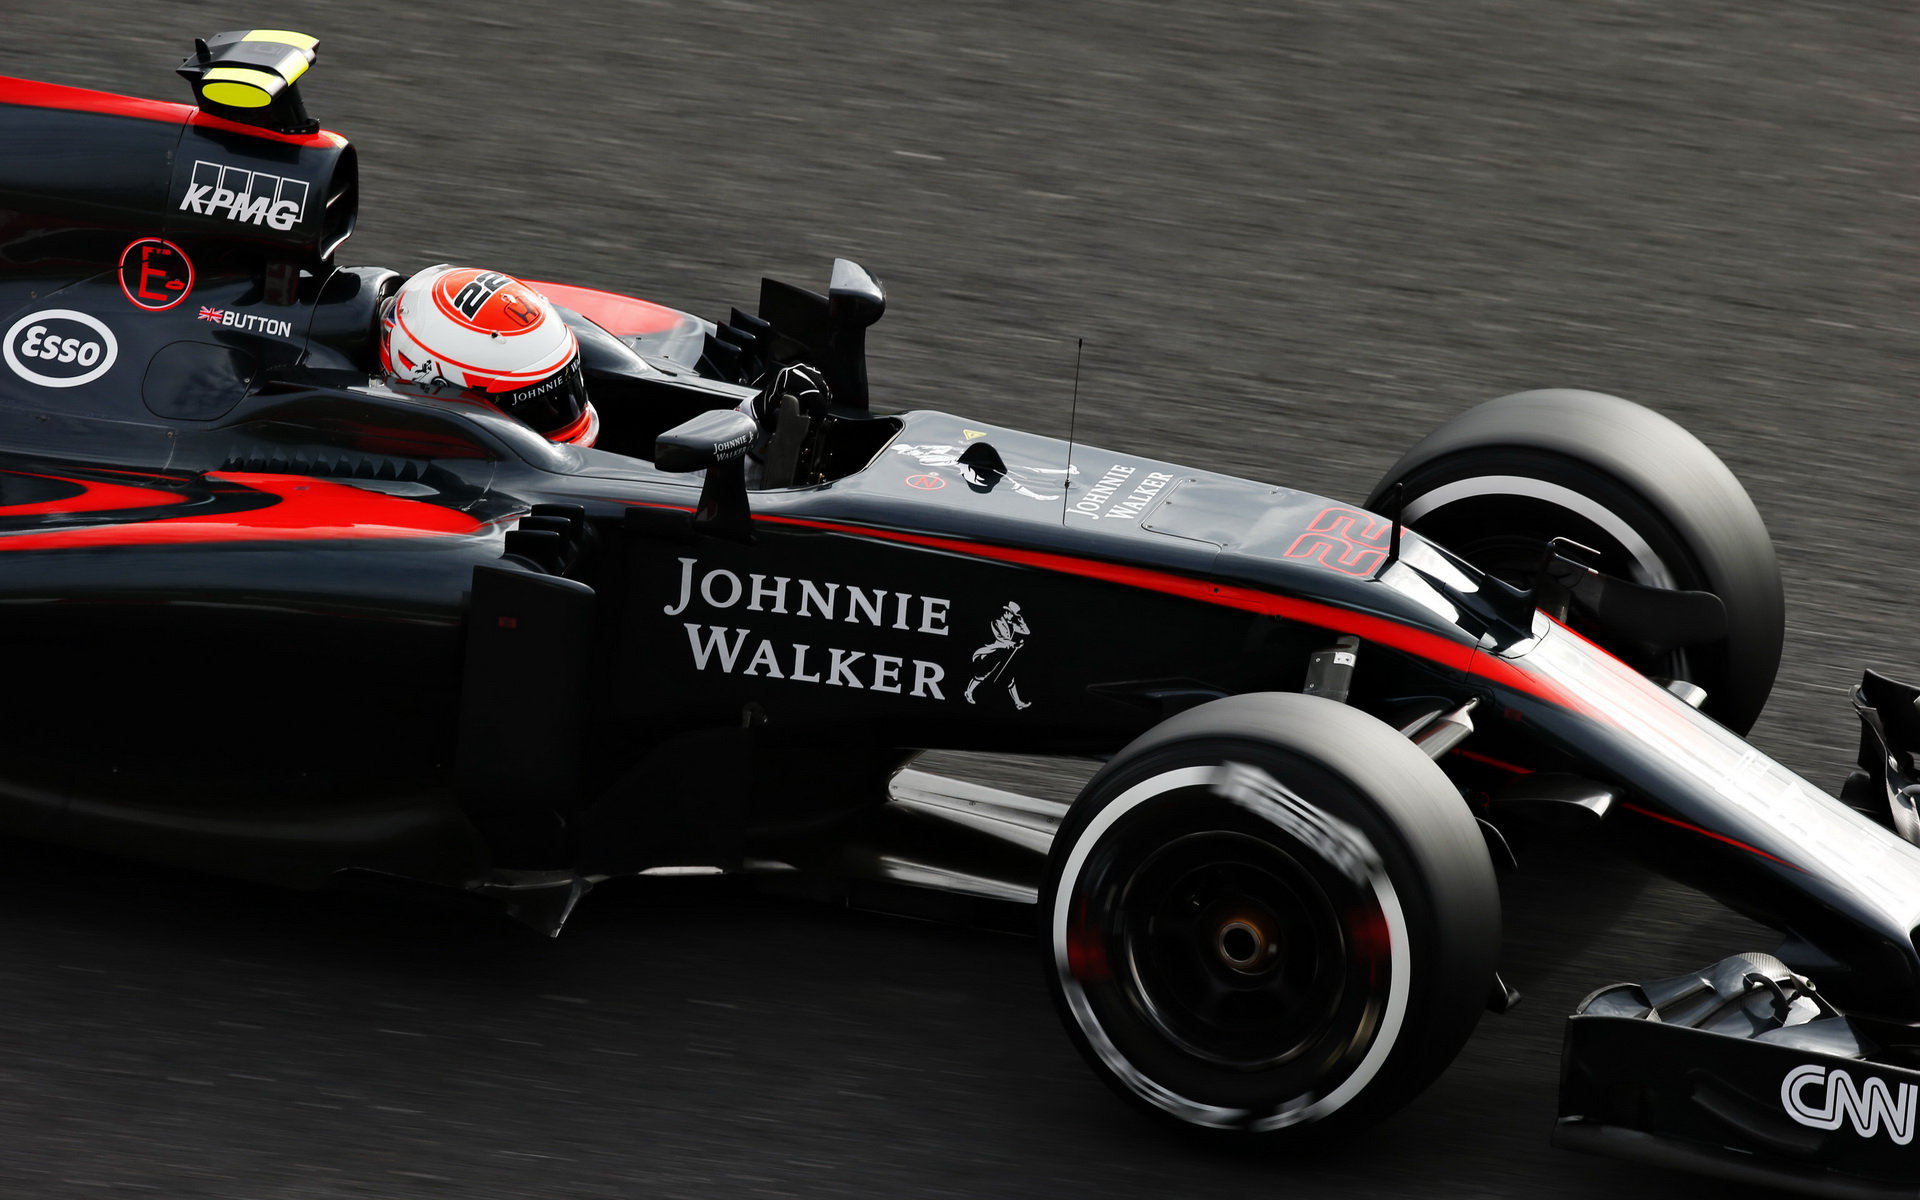 Jenson Button s McLarenem